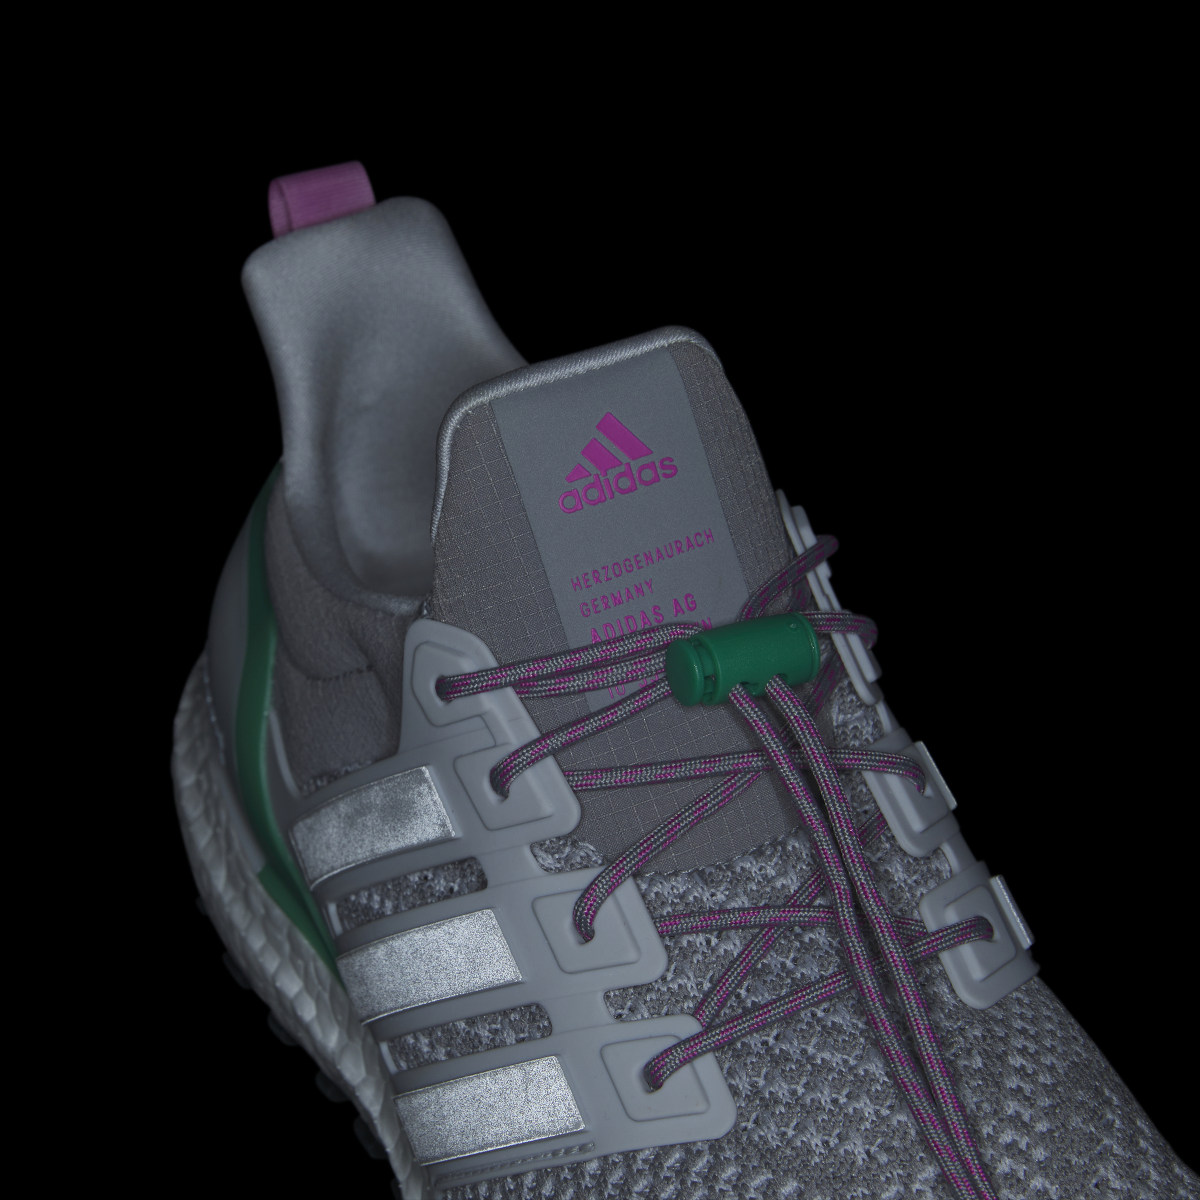 Adidas Chaussure Ultraboost 1.0. 12